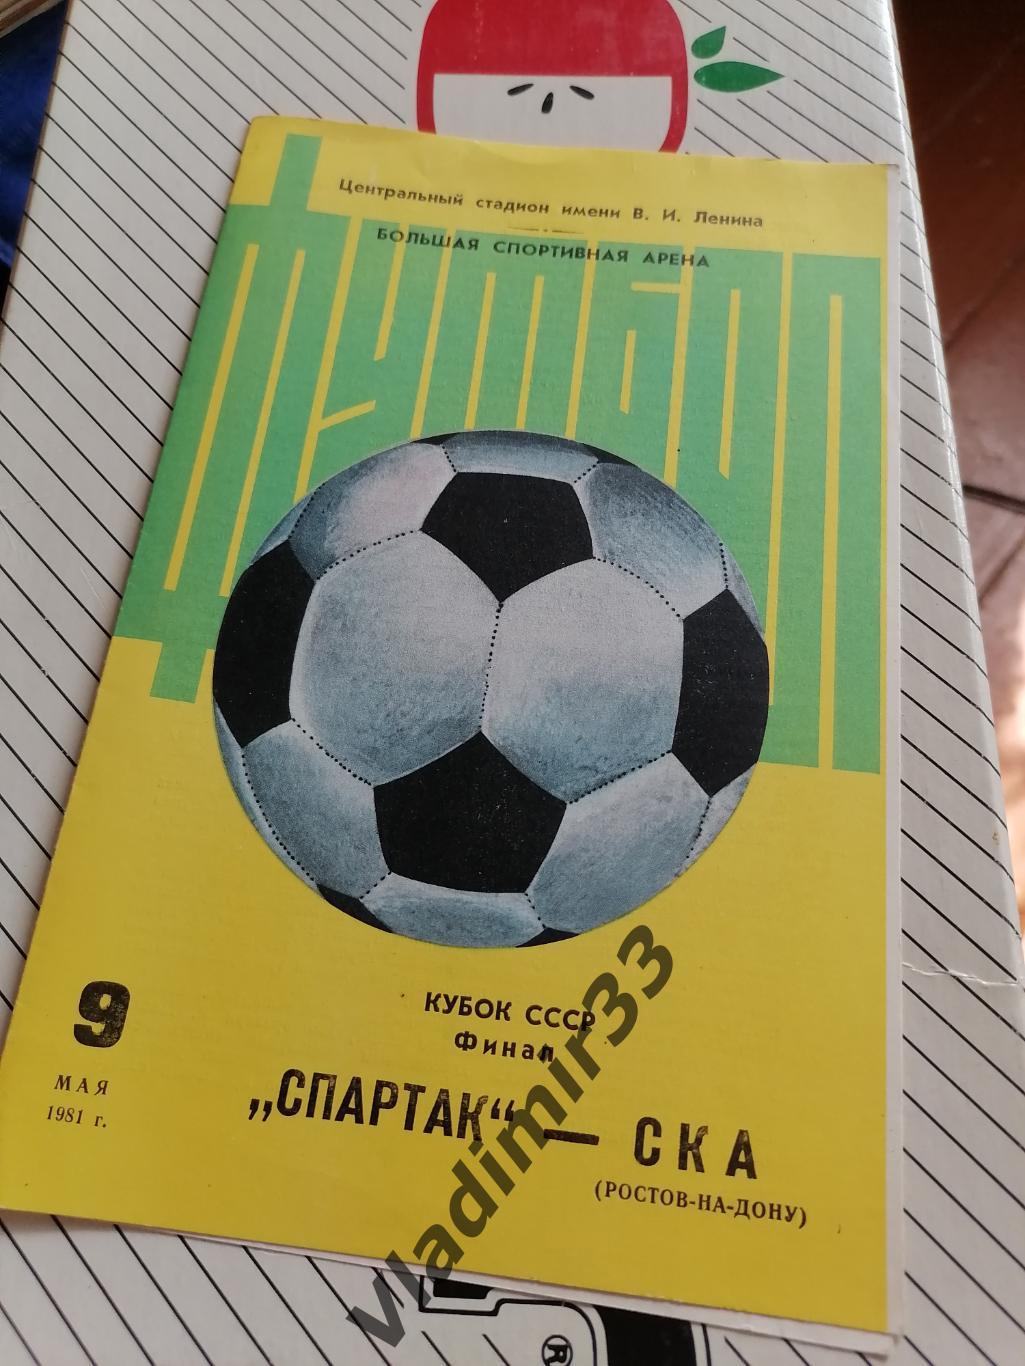 Спартак Москва - СКА РОСТОВ-НА-ДОНУ 1981 ФИНАЛ 1